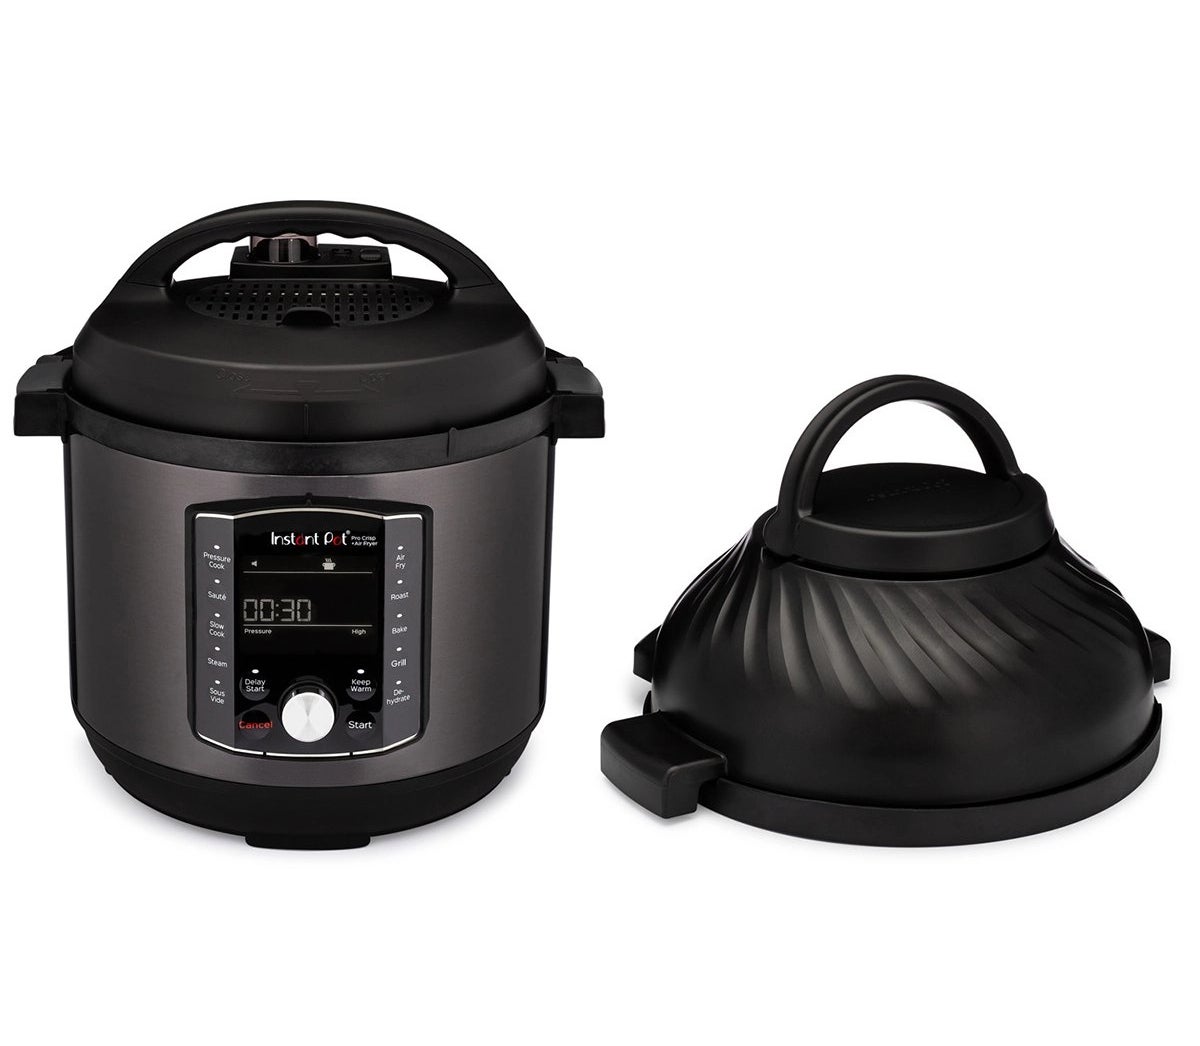 Instant Pot pro crisp vs Ninja foodi max: Which multi-cooker is best?